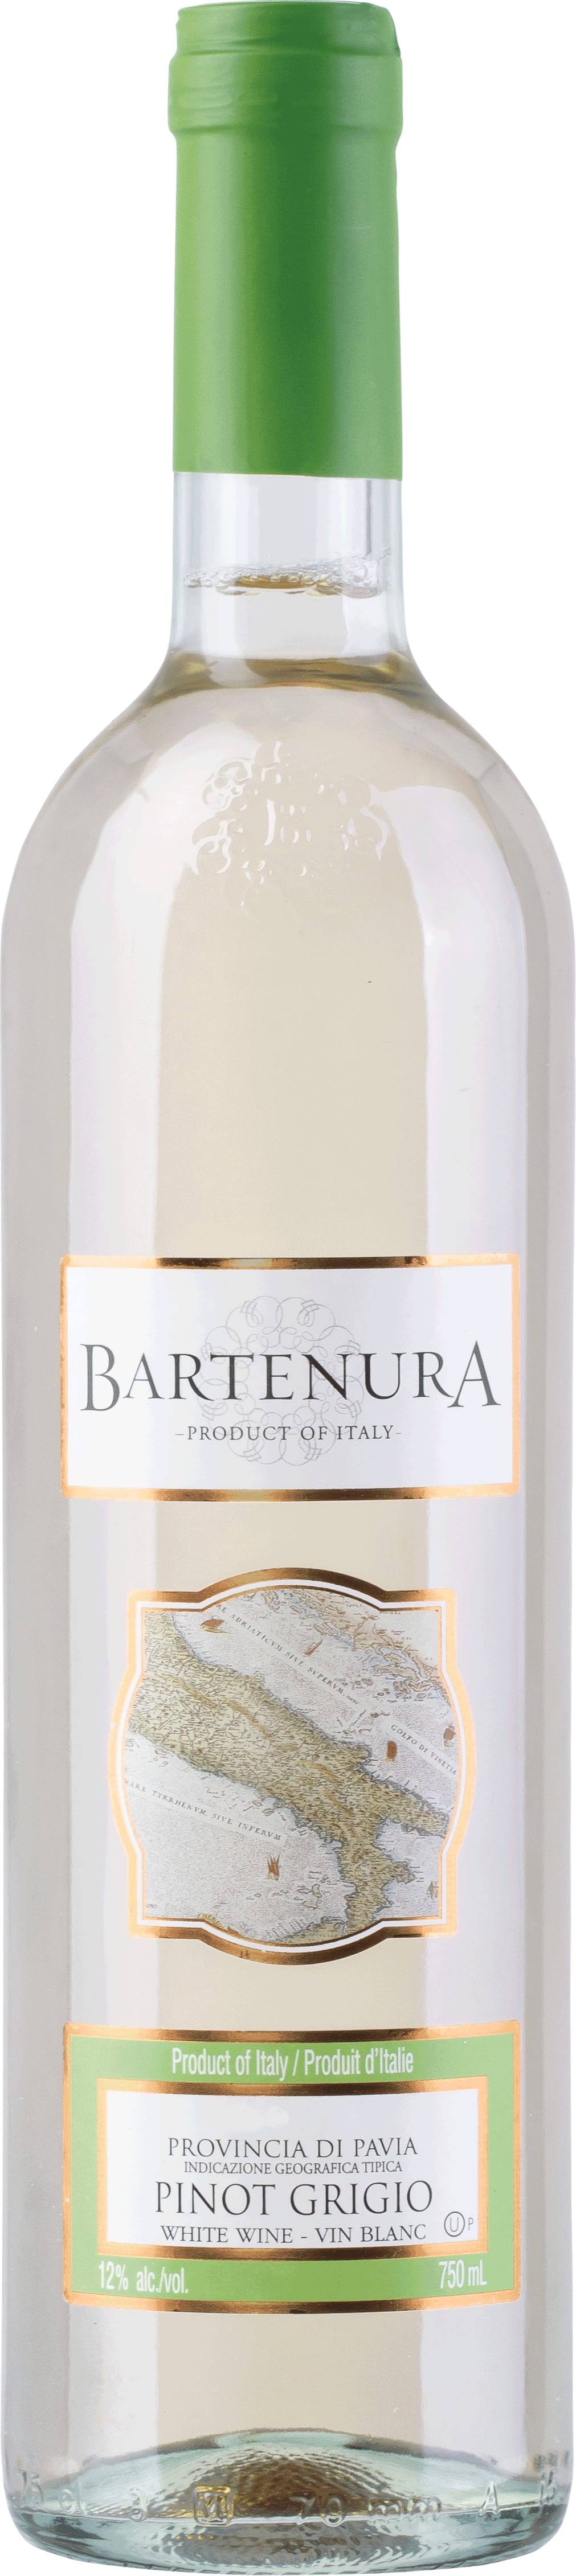 Bartenura Pinot Grigio - Italy